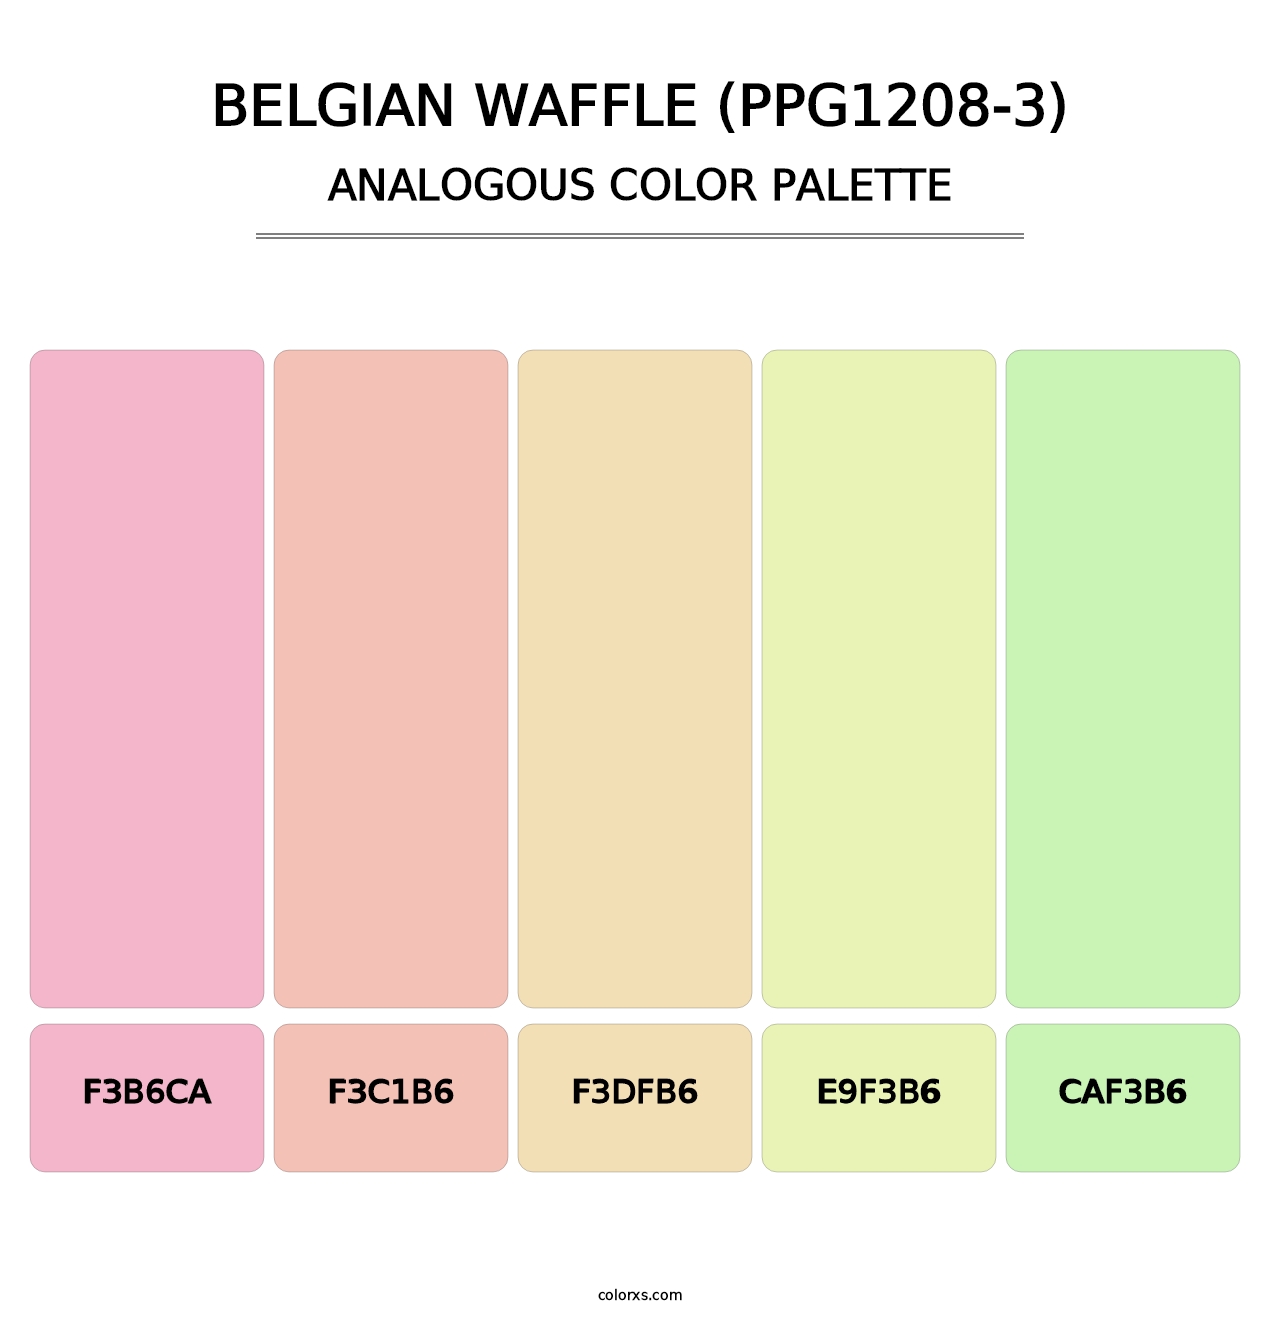 Belgian Waffle (PPG1208-3) - Analogous Color Palette